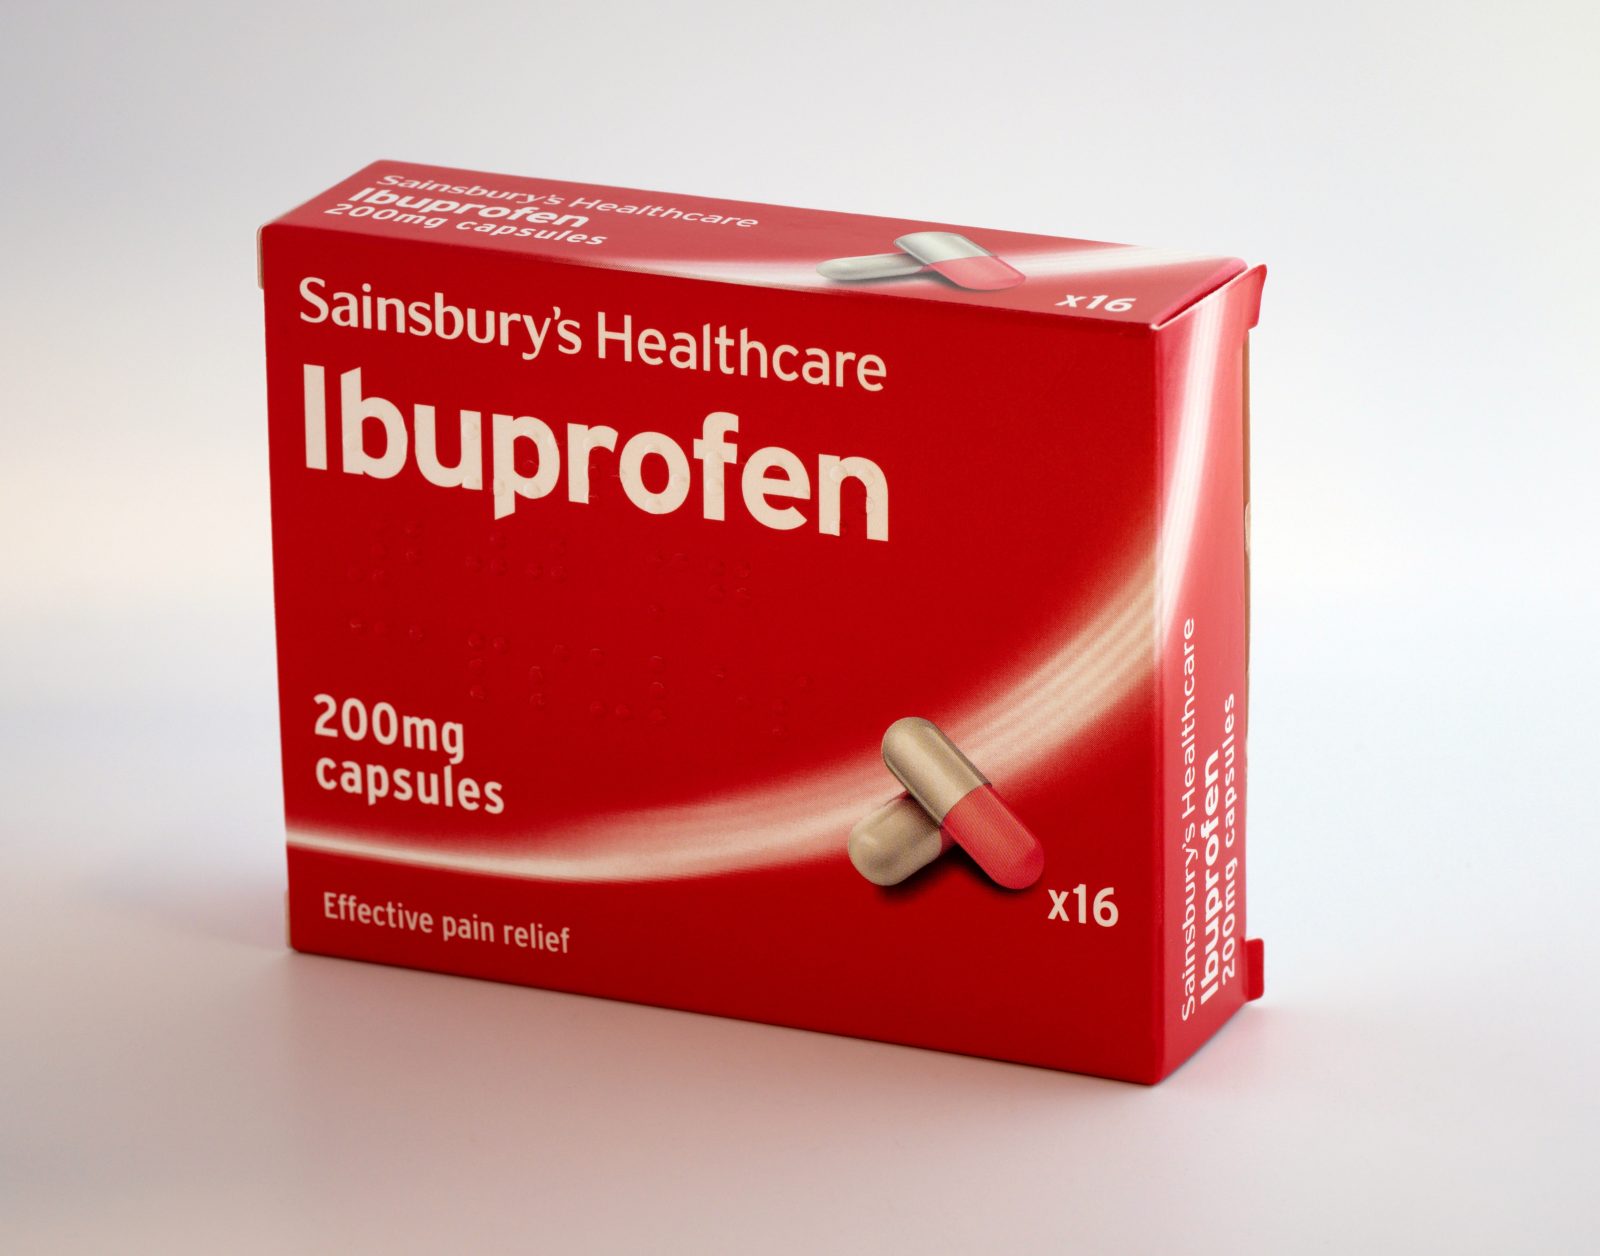 A box of ibuprofen.